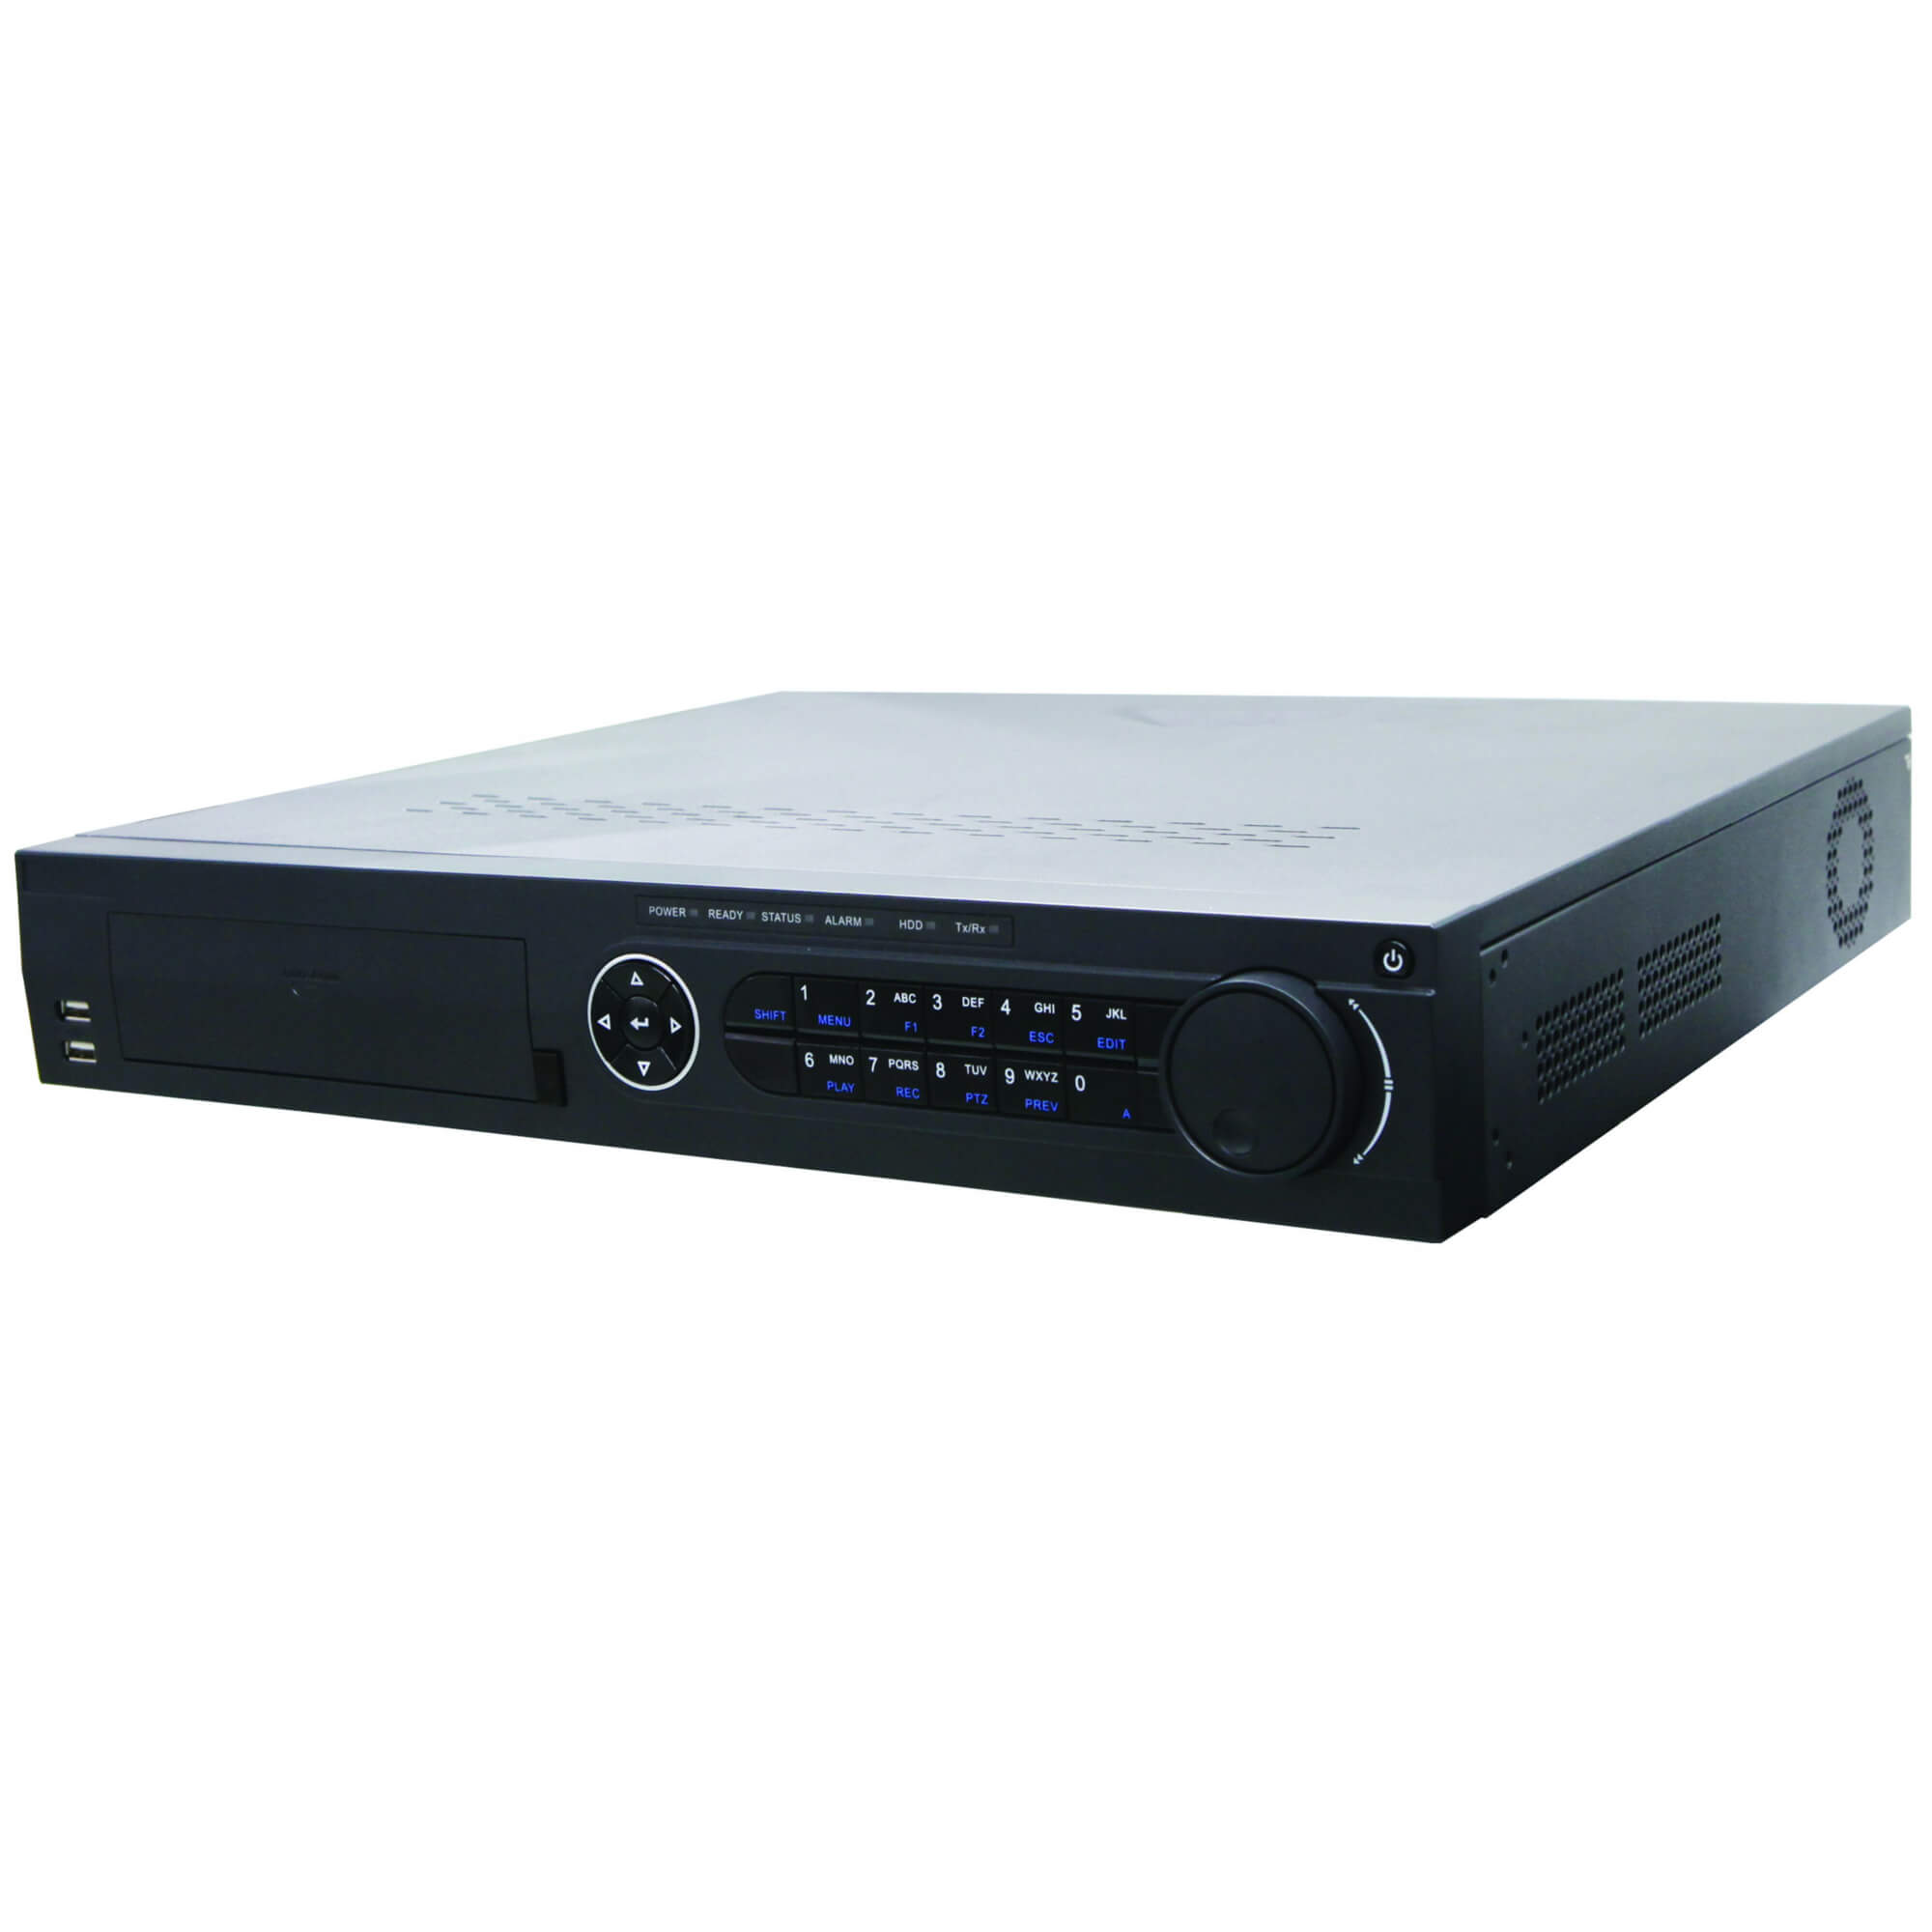  NVR Hikvision DS-7716NI-E4/16P, 16 Canale, 4 SATA 